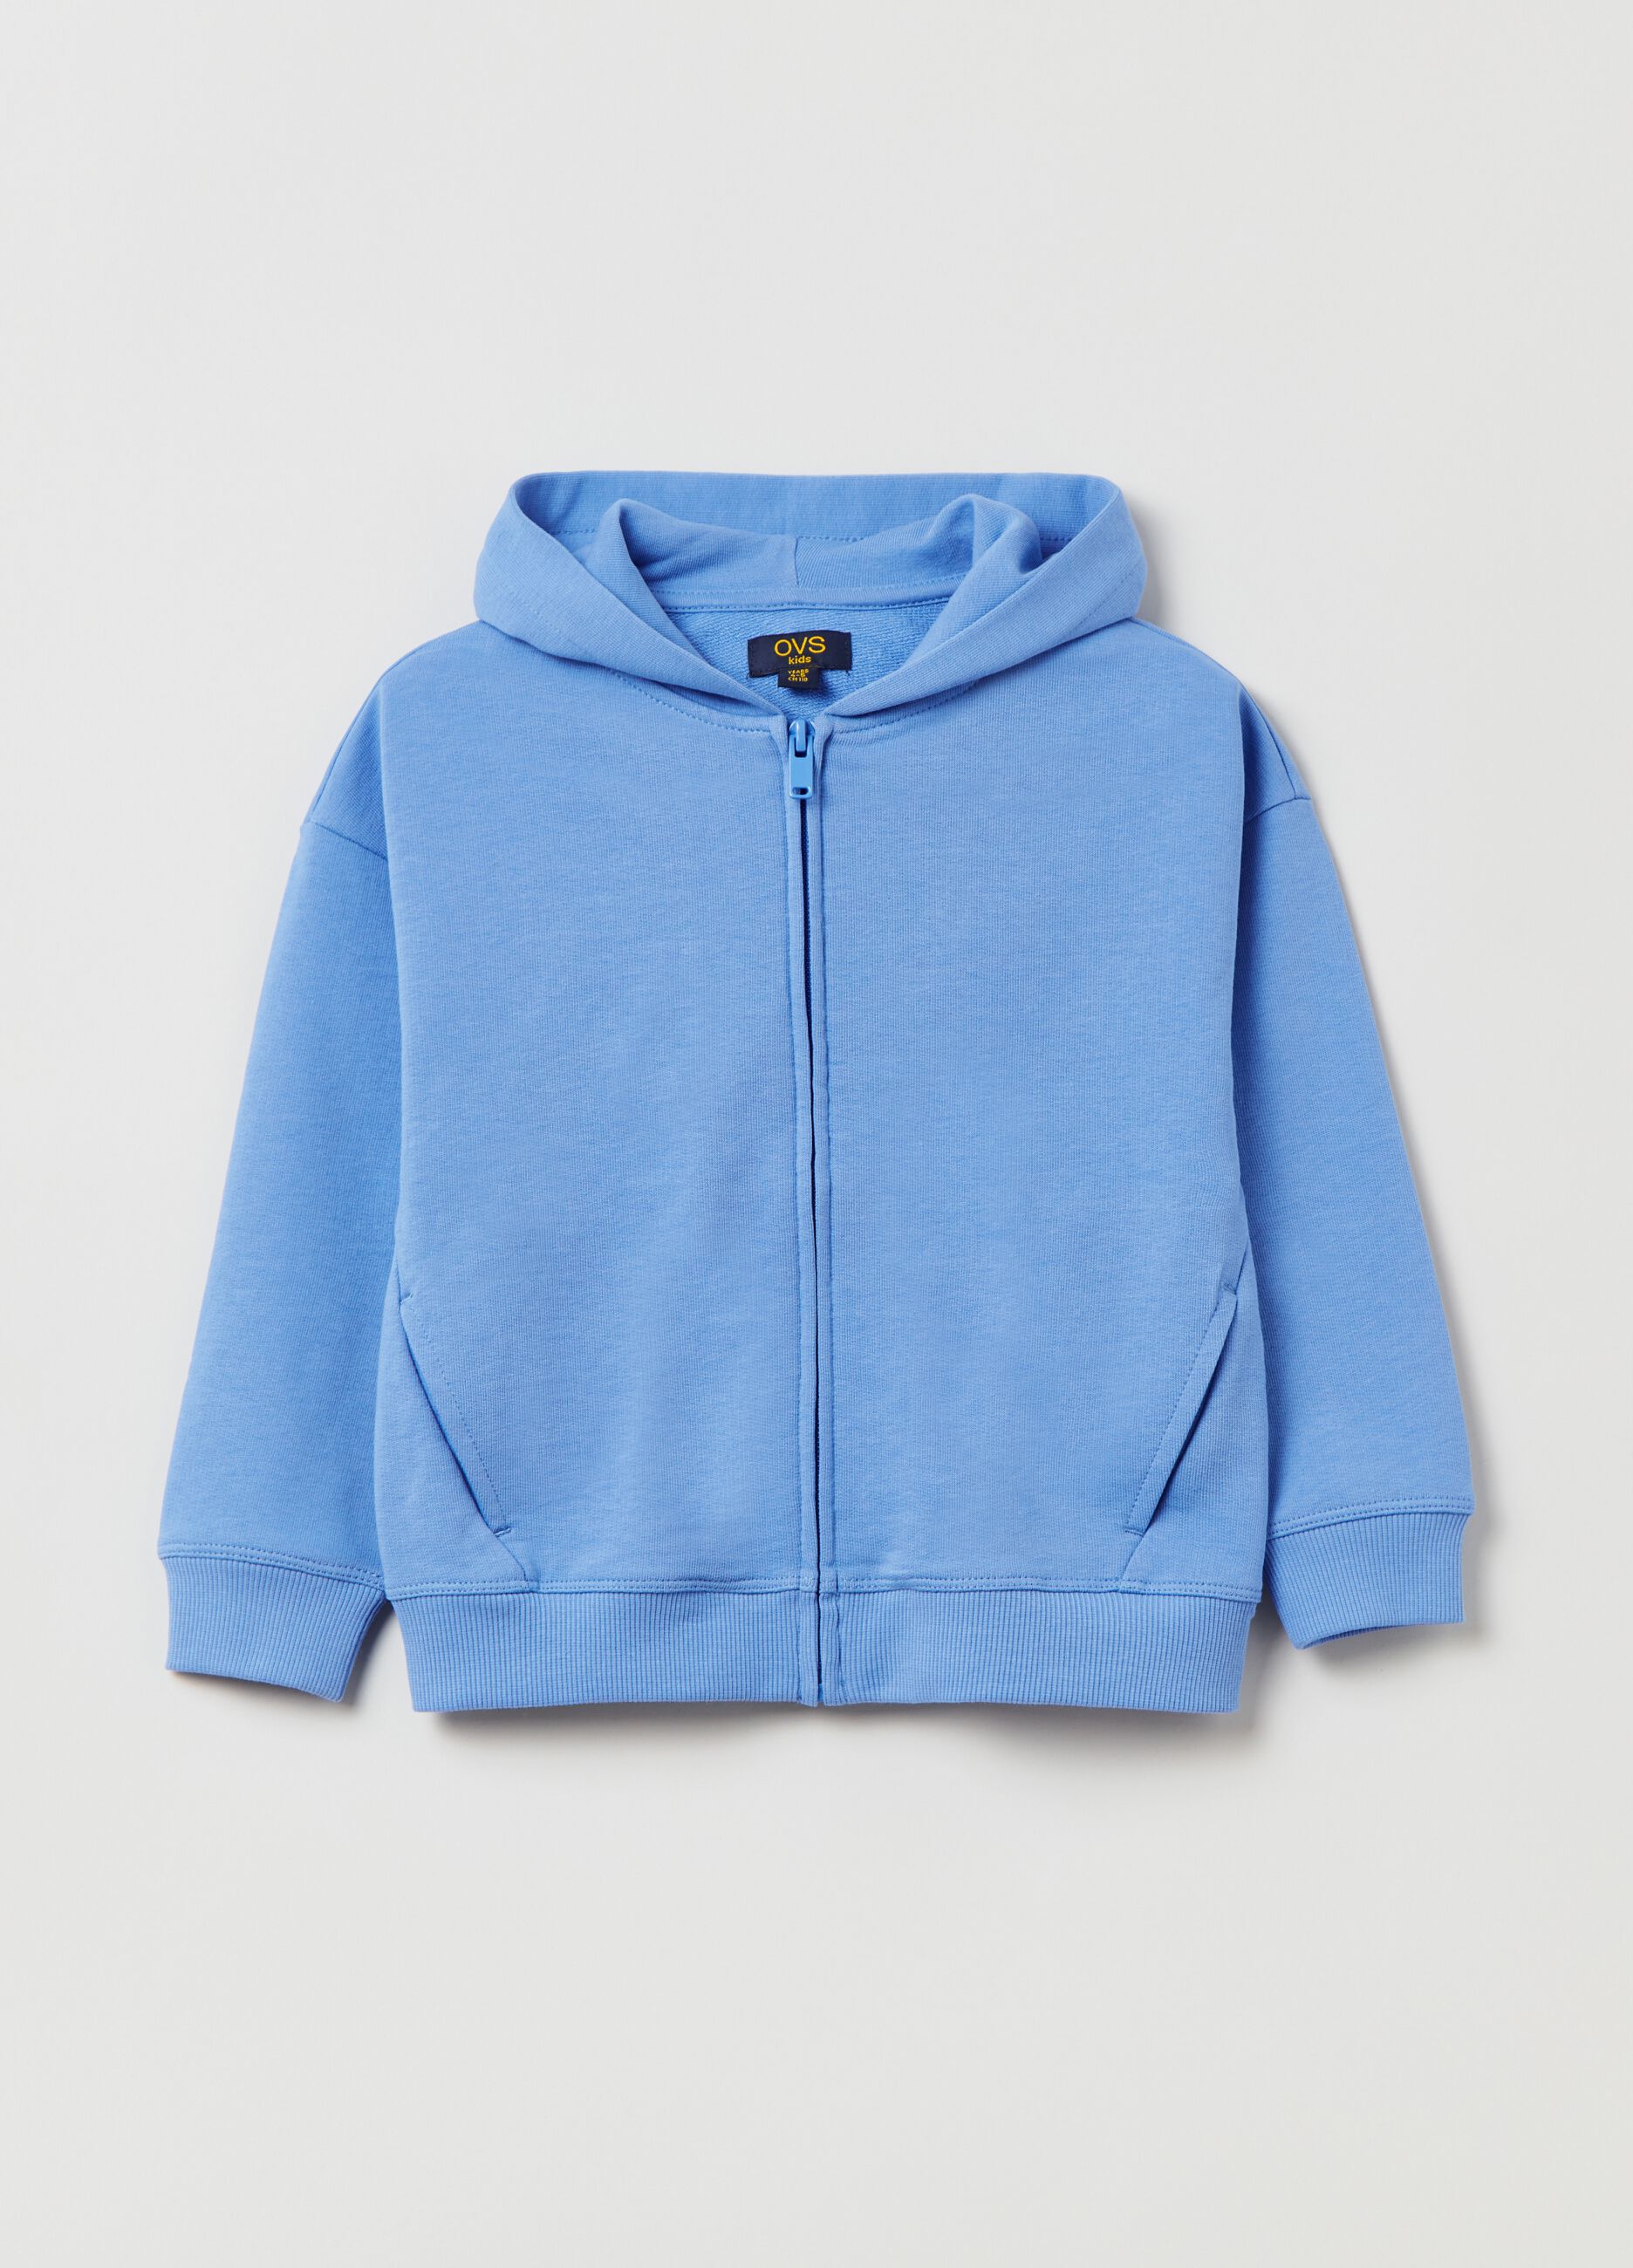 Cotton full-zip sweatshirt with hood